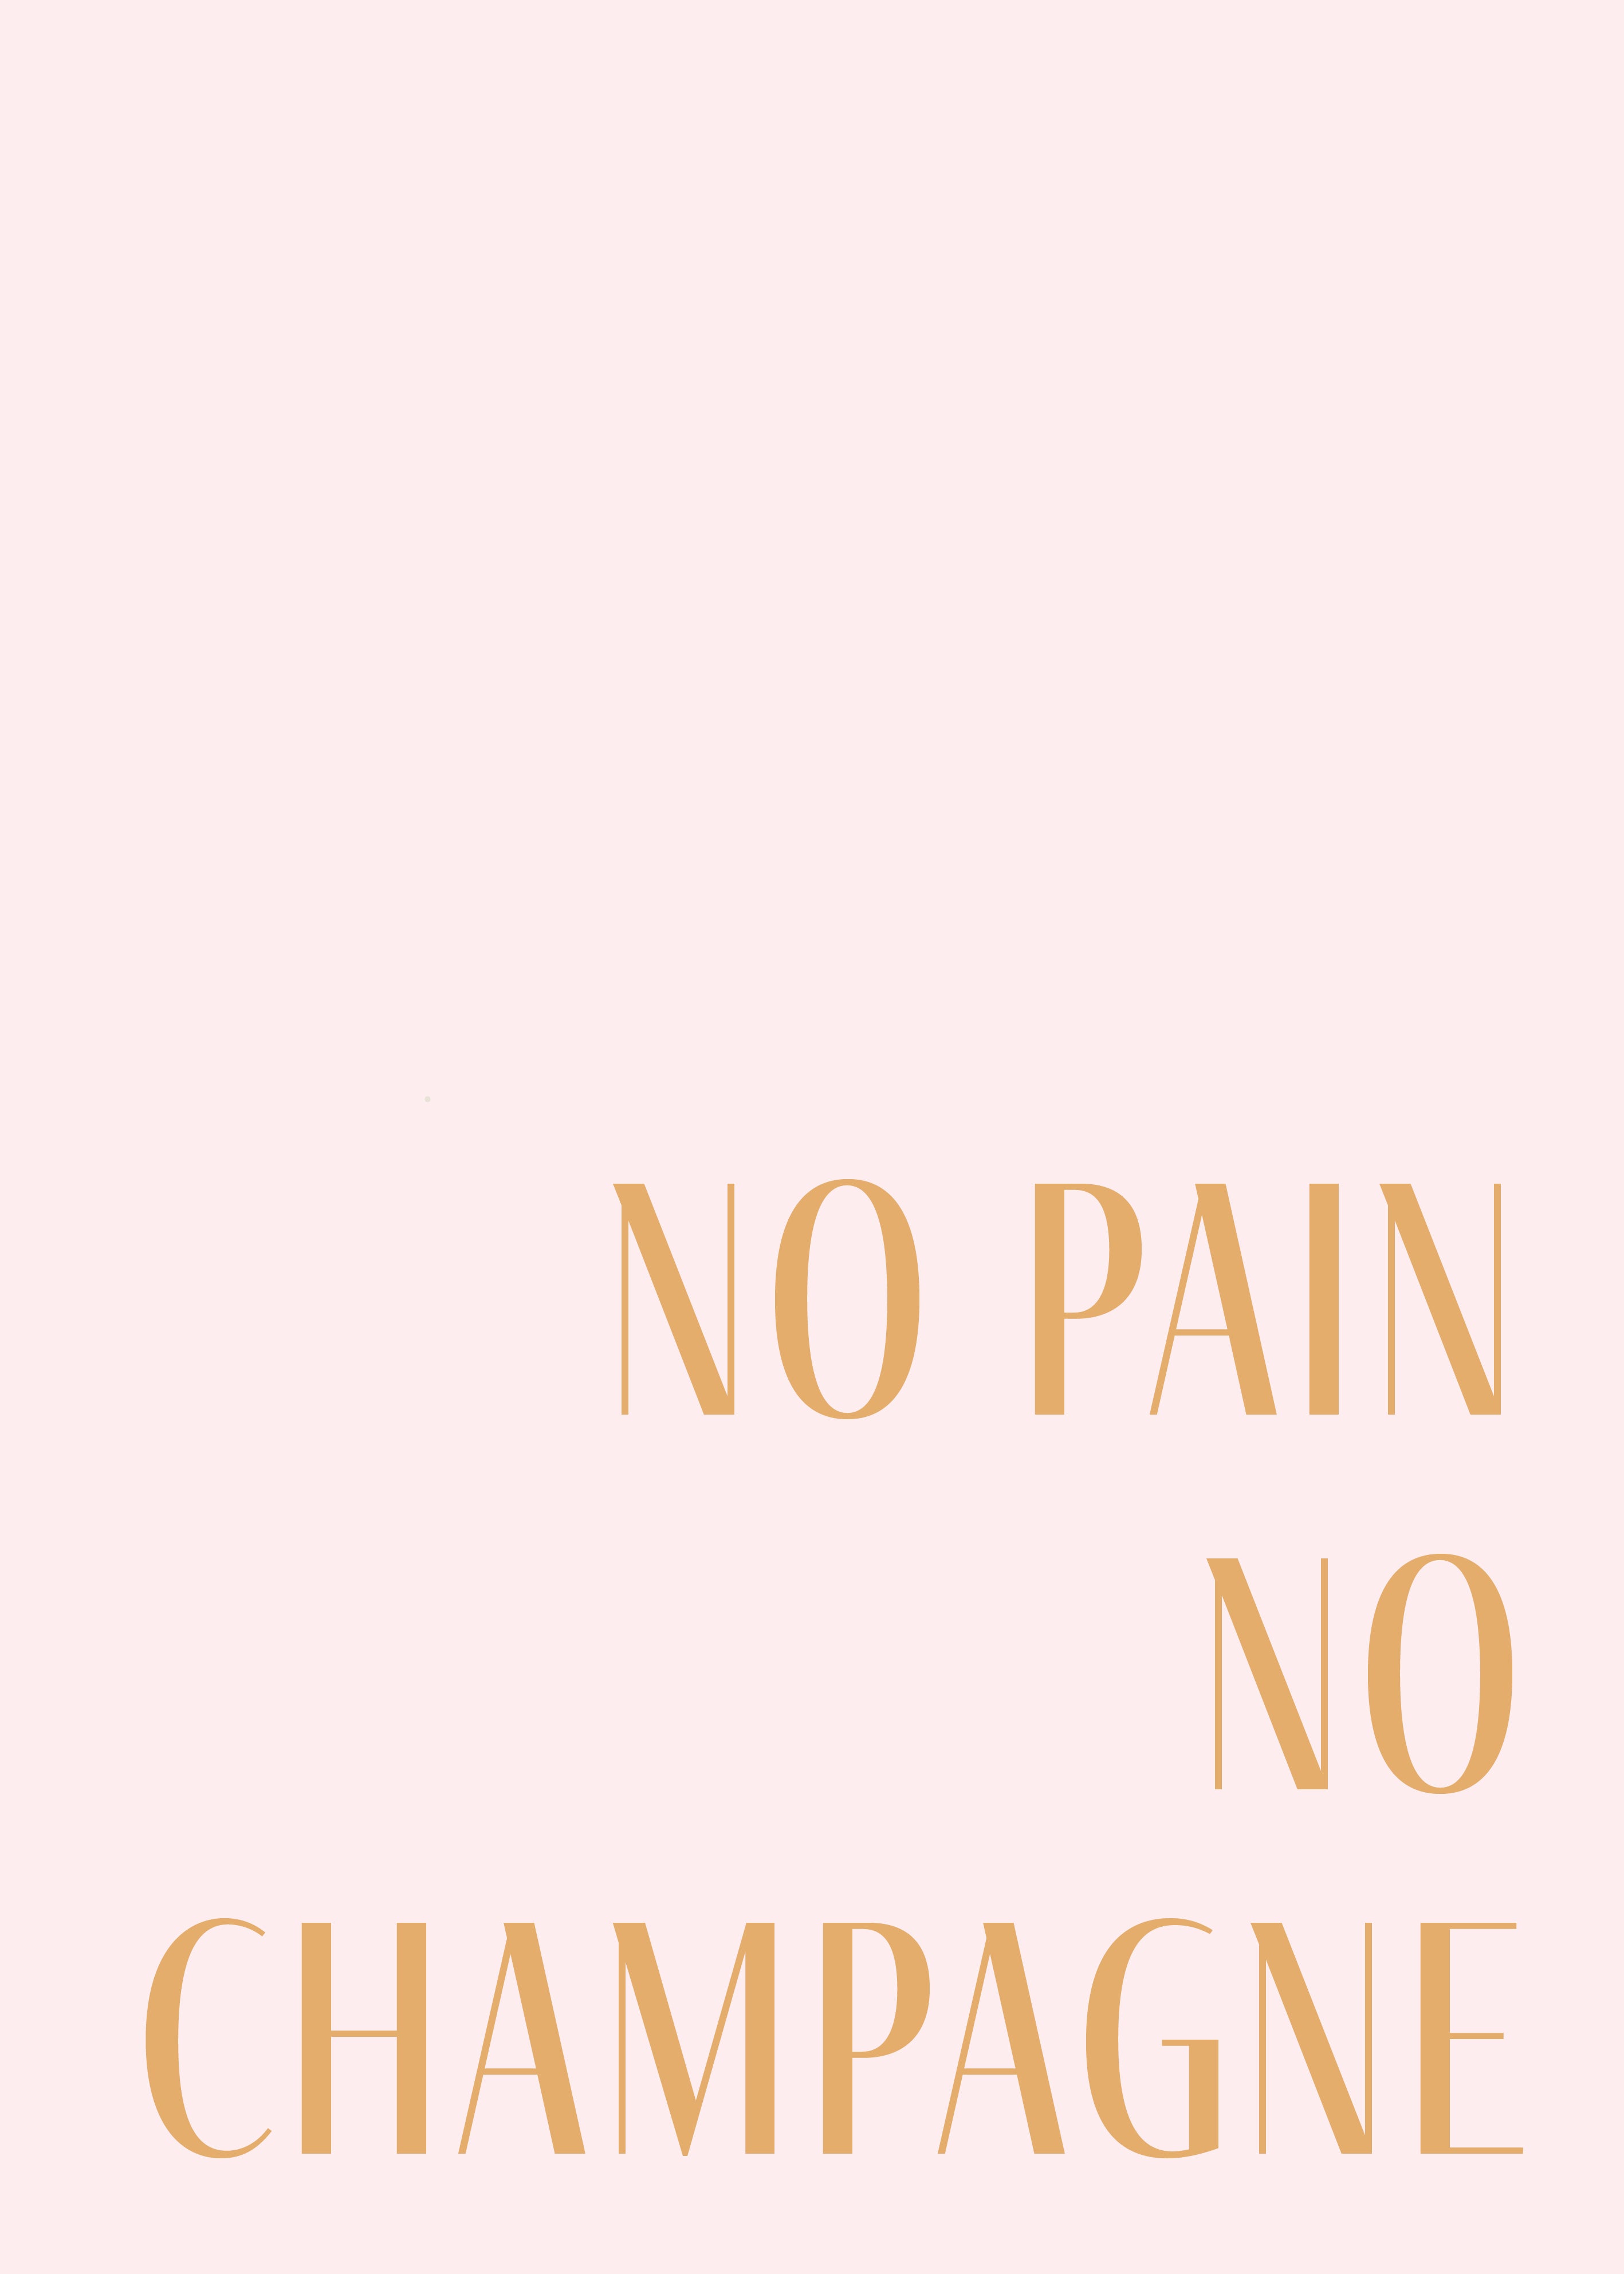 No pain no champagne - rosa